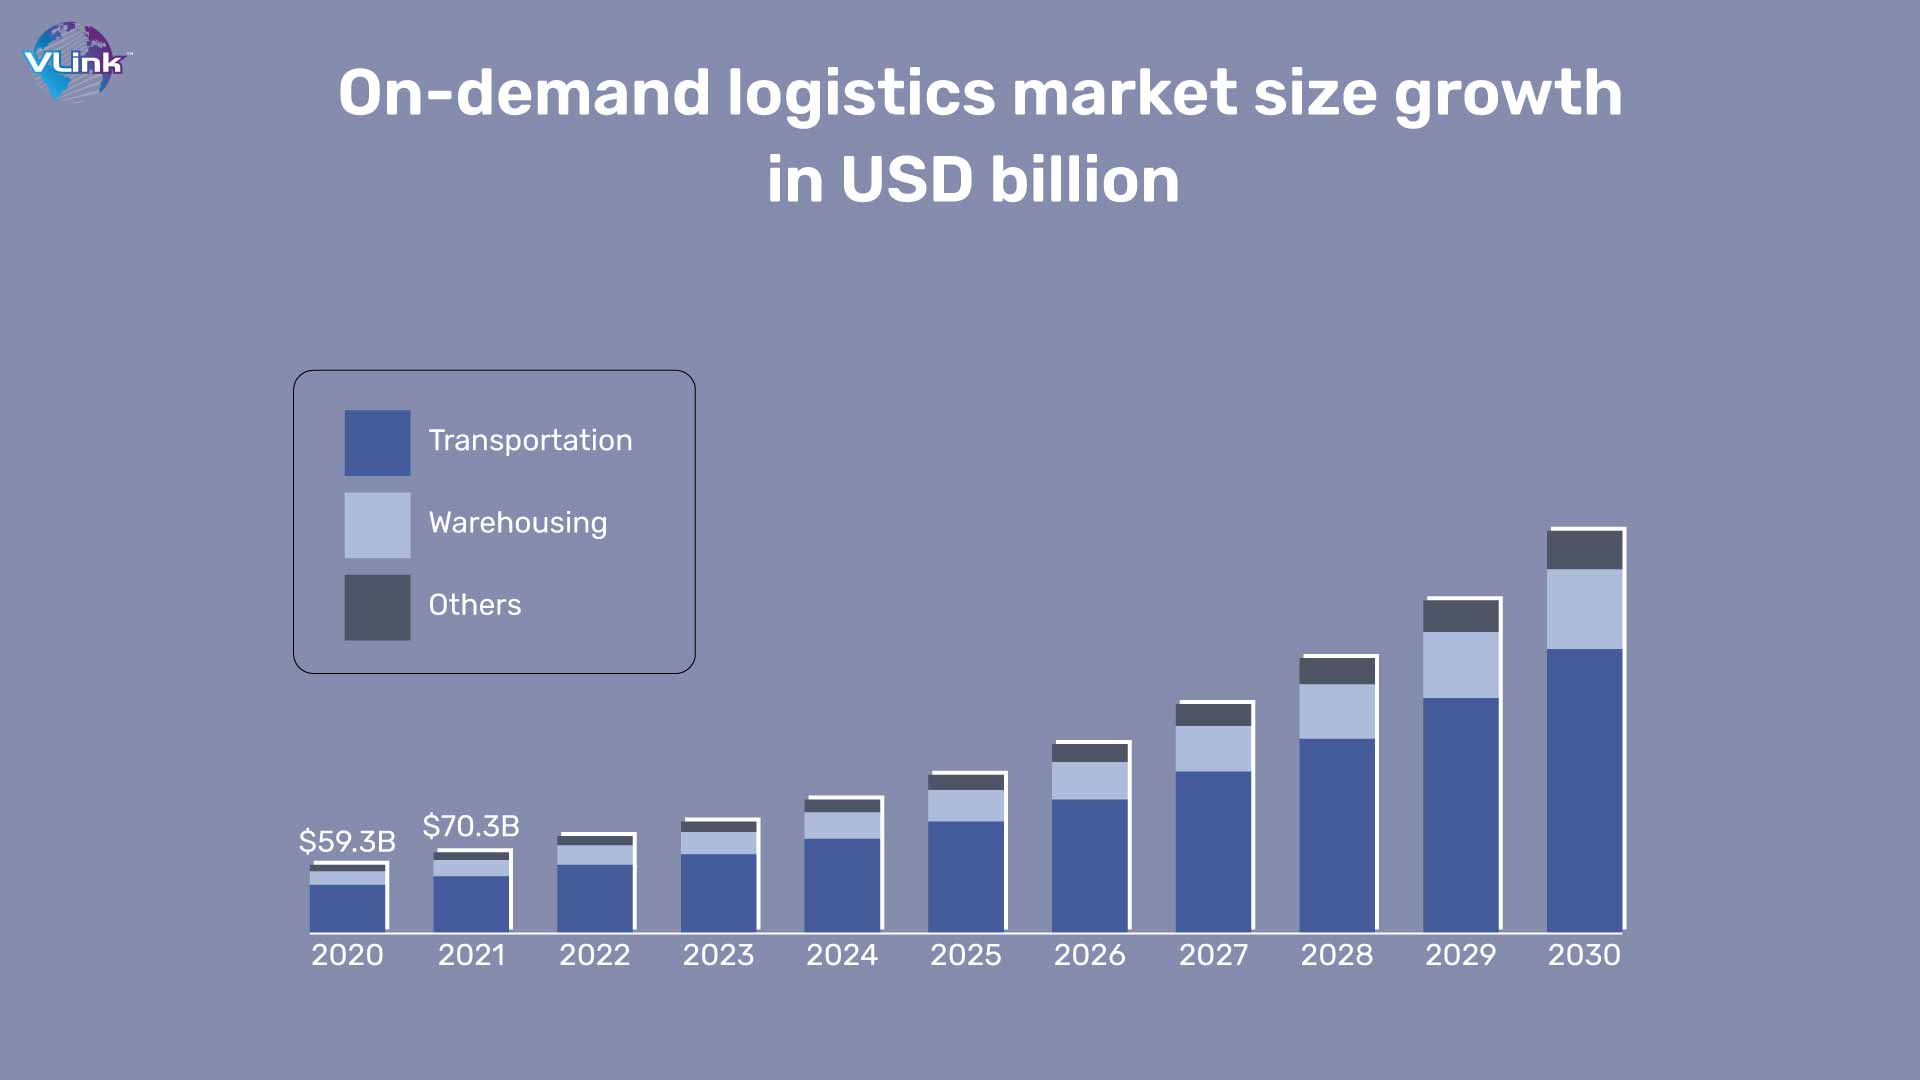 On-demand logistics market size growth in USD billion